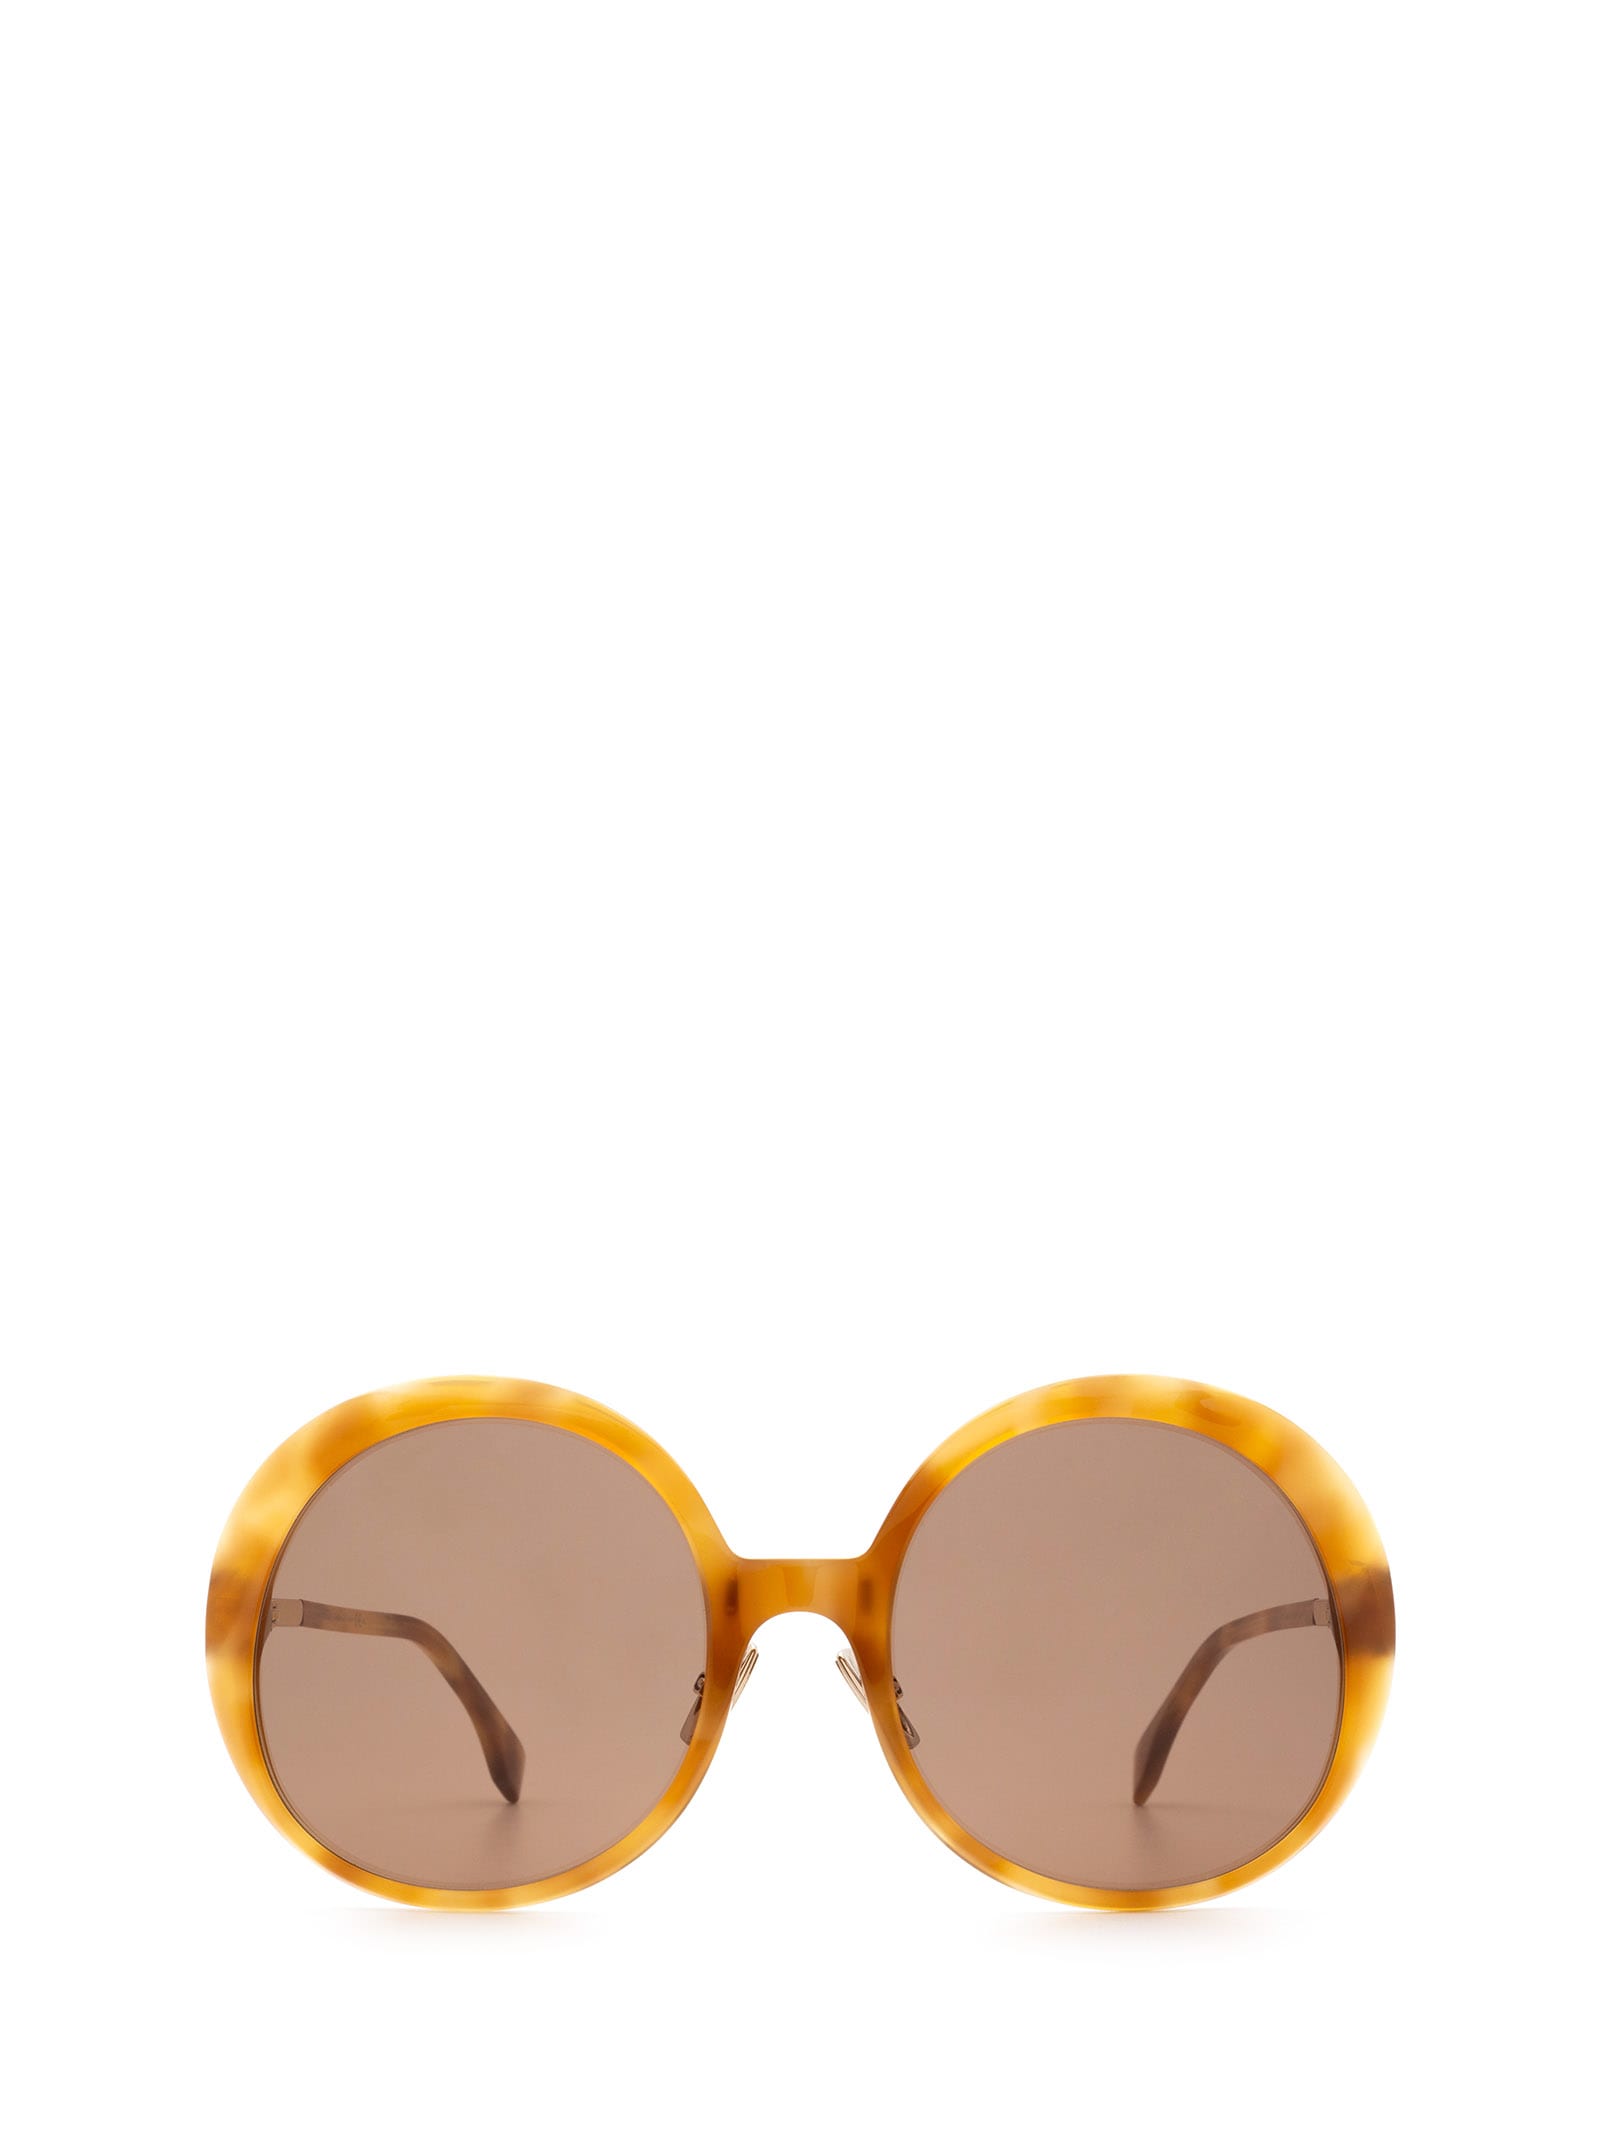 Fendi Eyewear Ff 0430/s Havana Honey Sunglasses